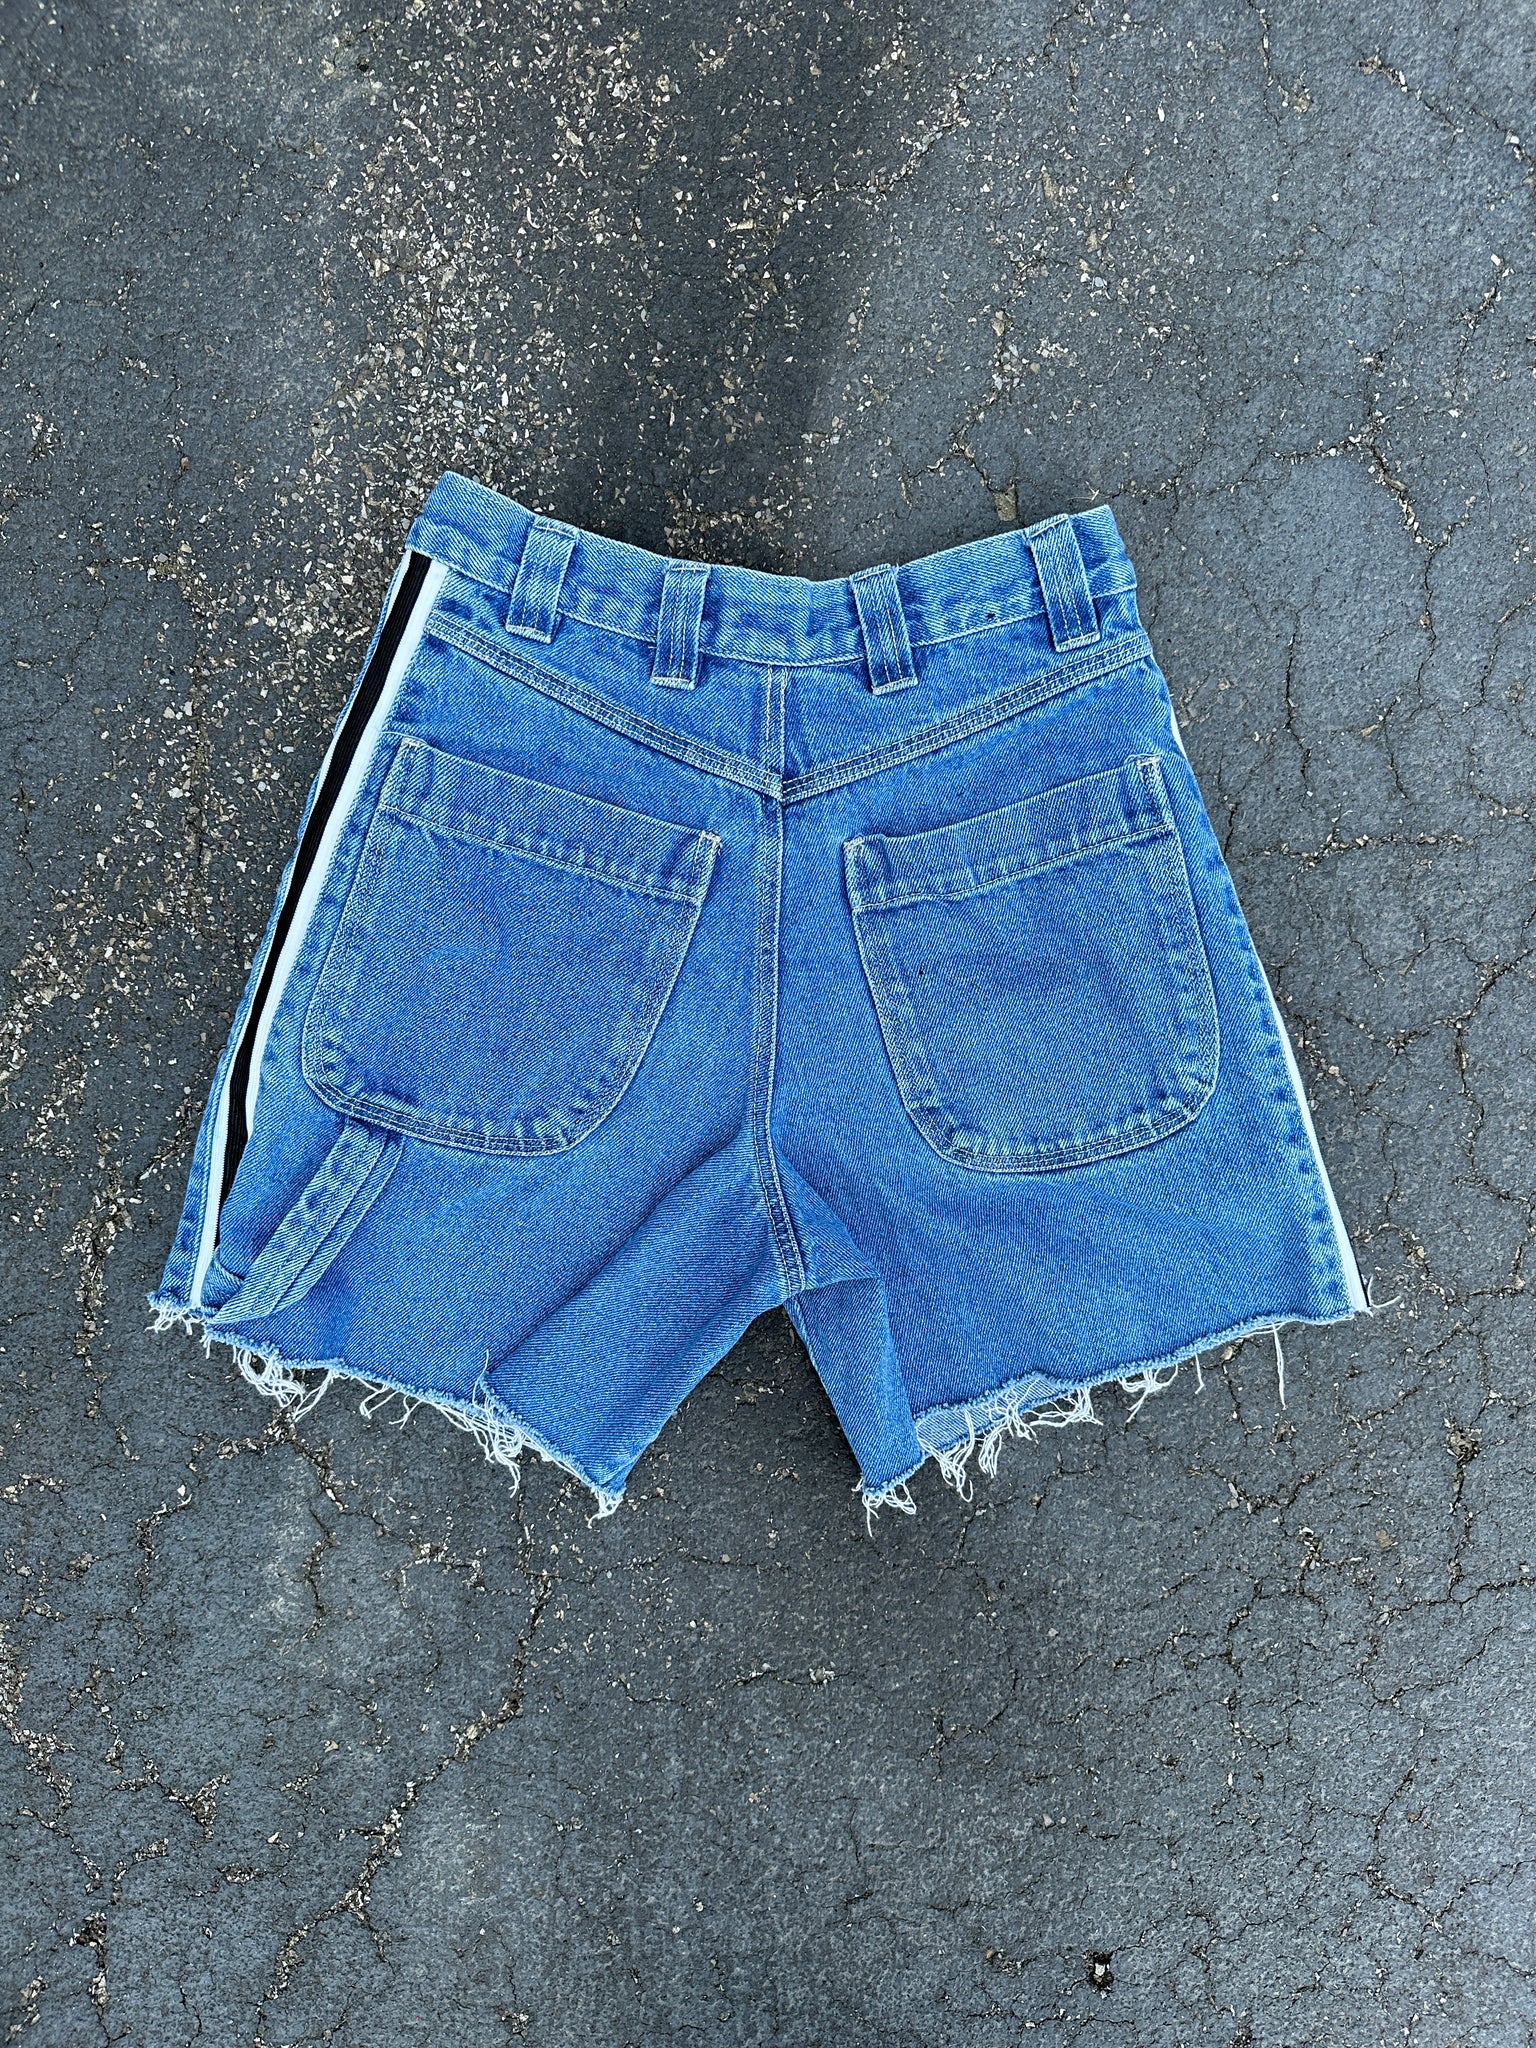 24" jean shorts